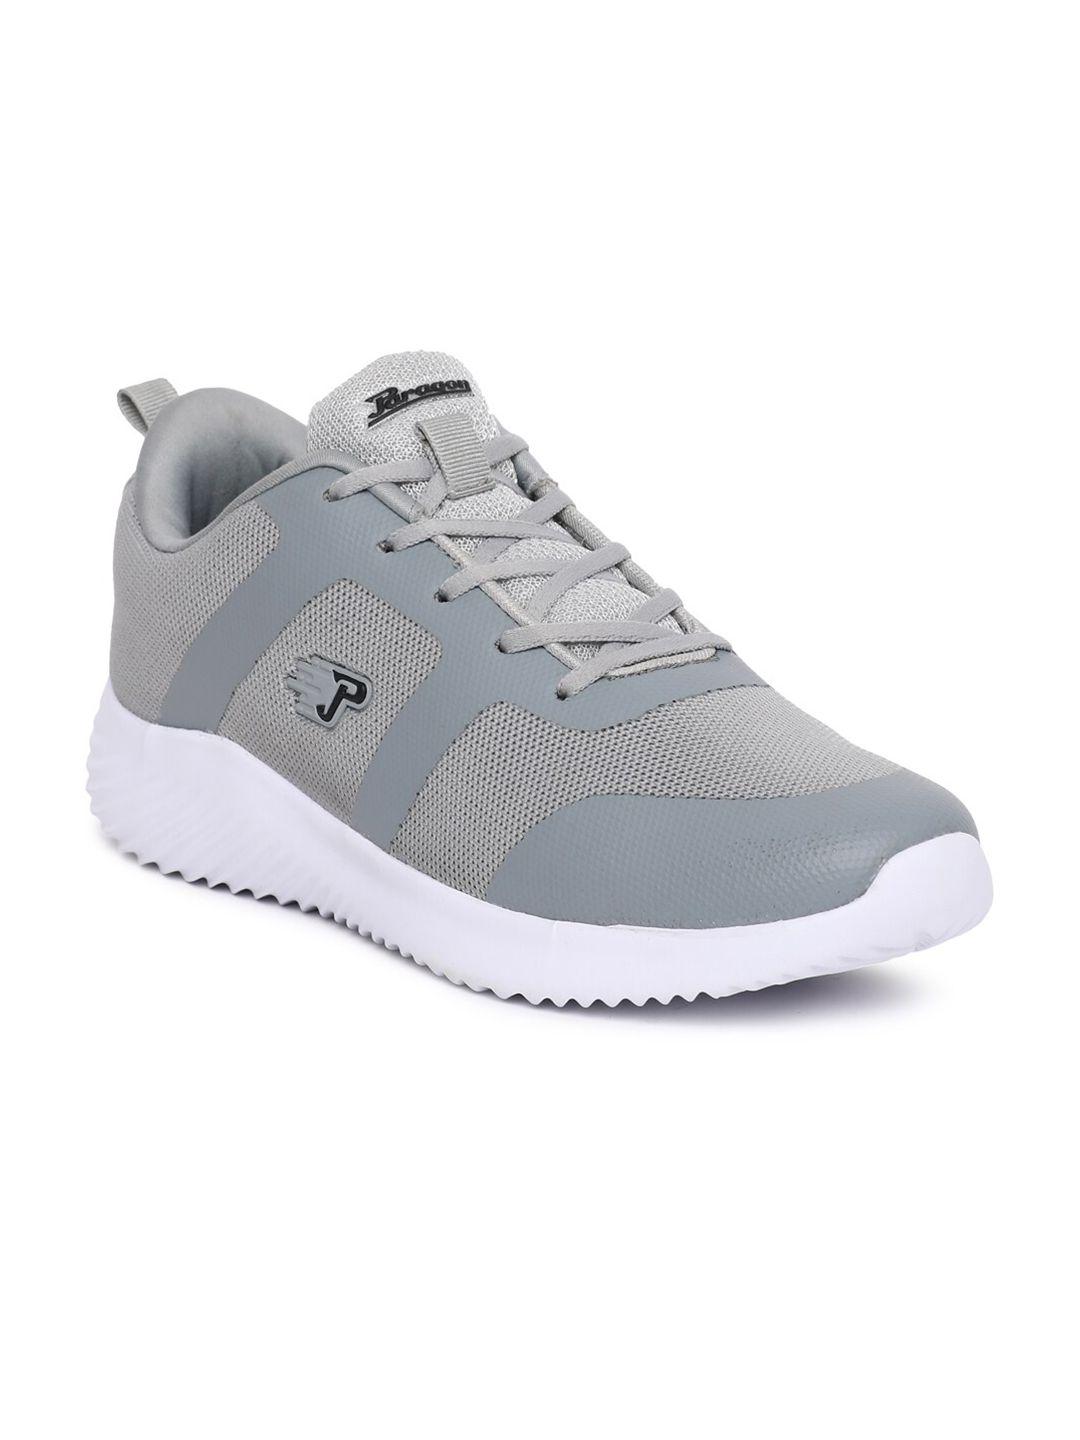 paragon-men-grey-textile-running-sports-shoes